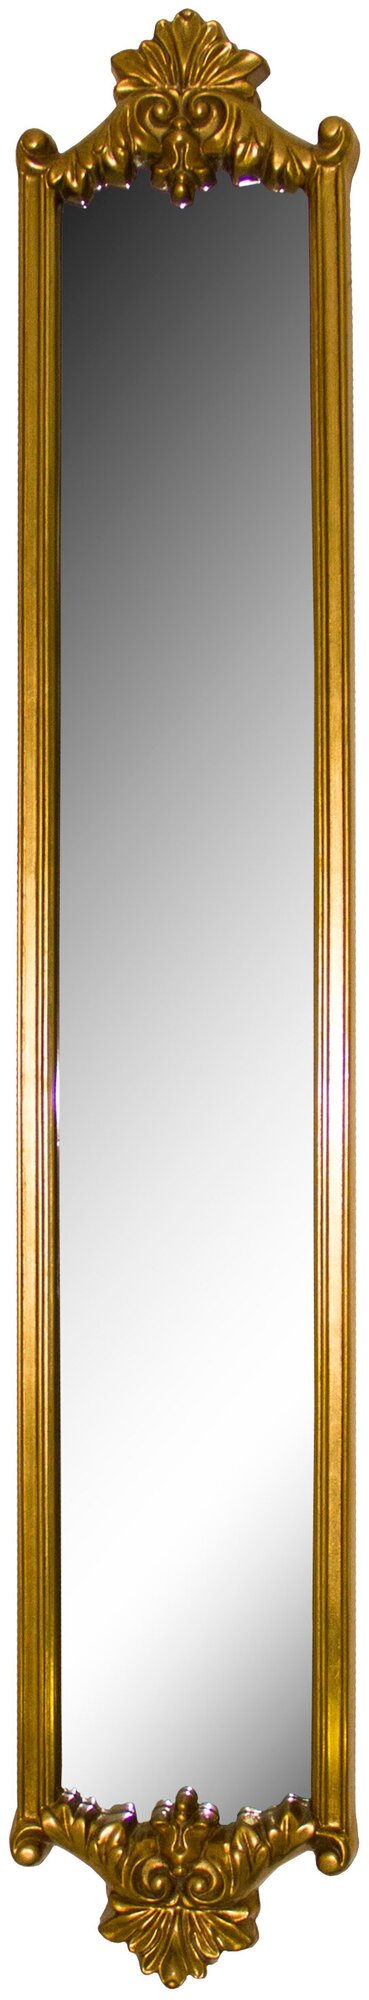 45-012 Зеркало настенное 24х5x139см, Glasar - фотография № 1